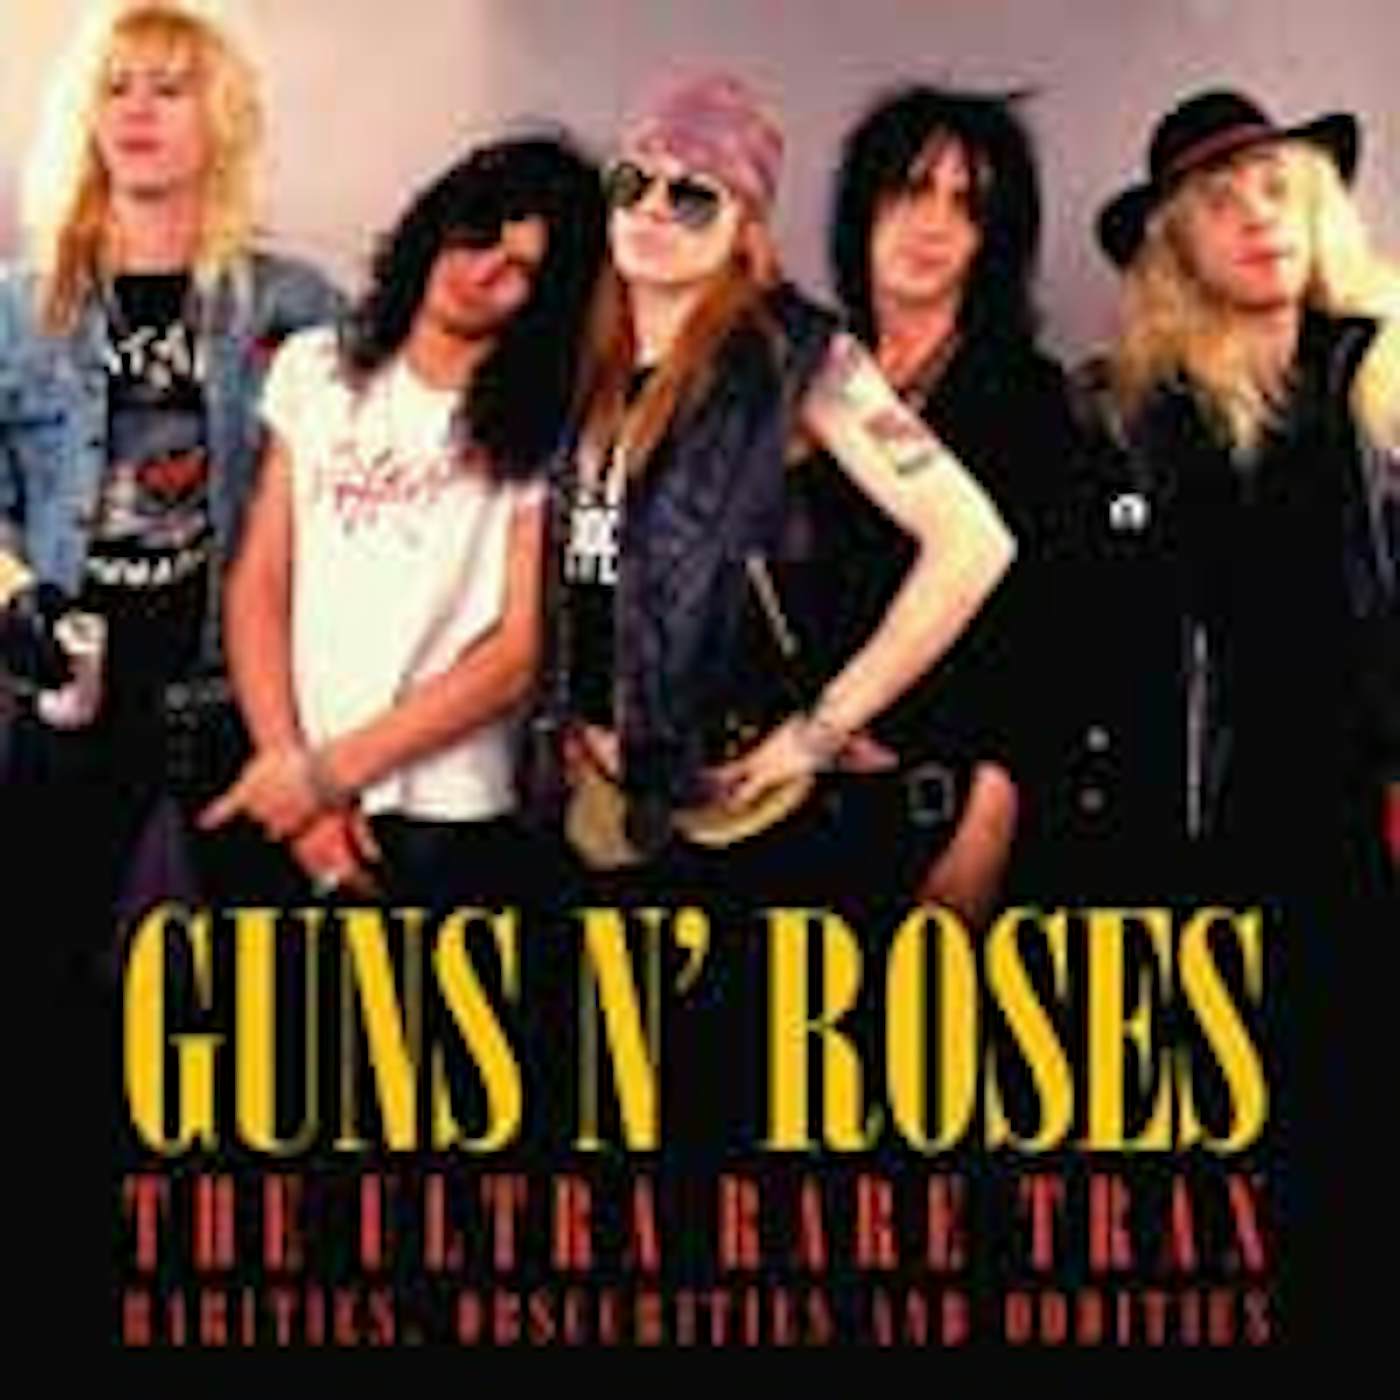 Guns N' Roses LP - The Ultra Rare Trax (Red Vinyl)